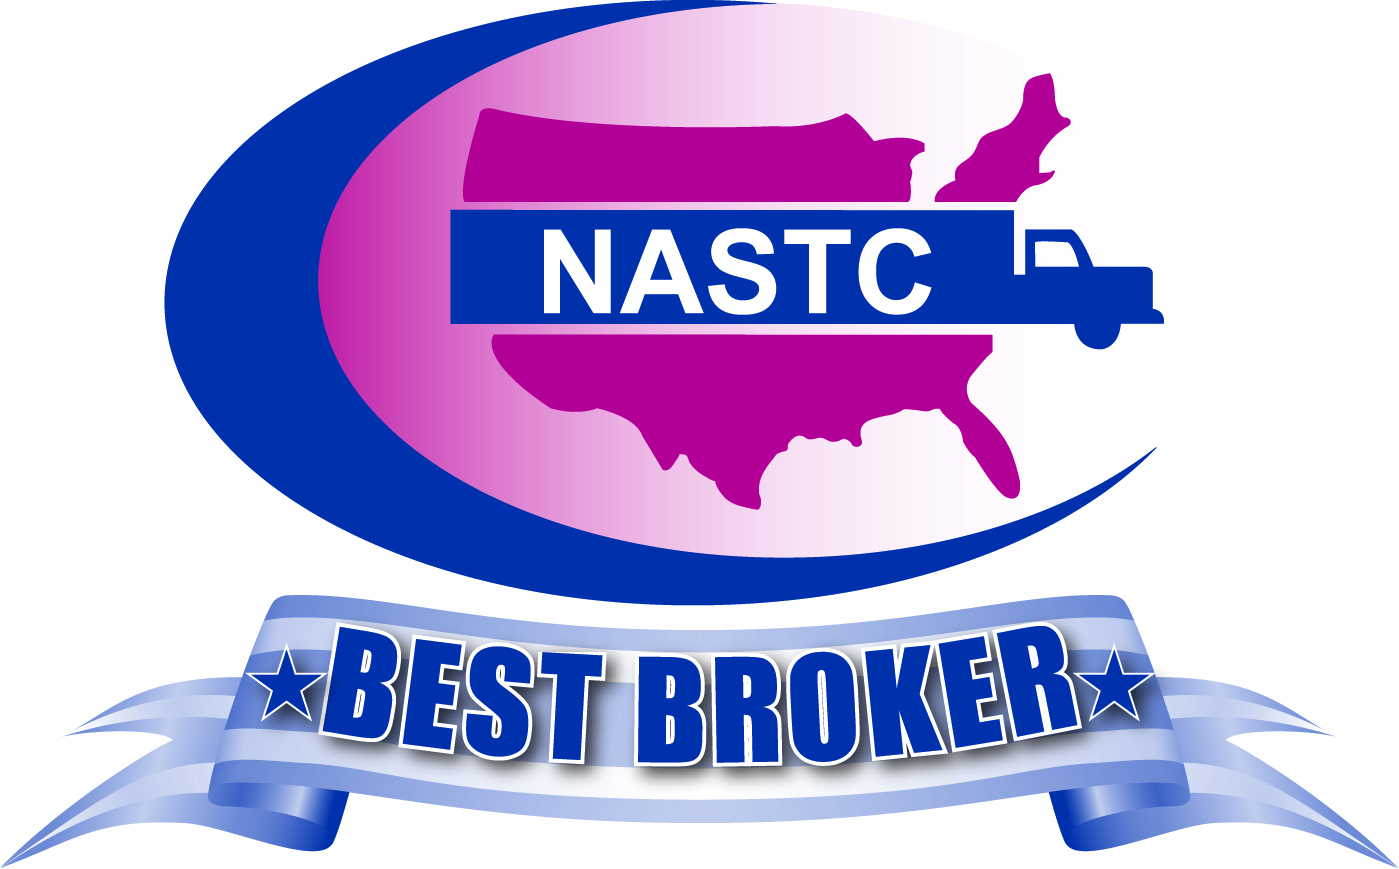 NASTC-Best-Broker.jpg